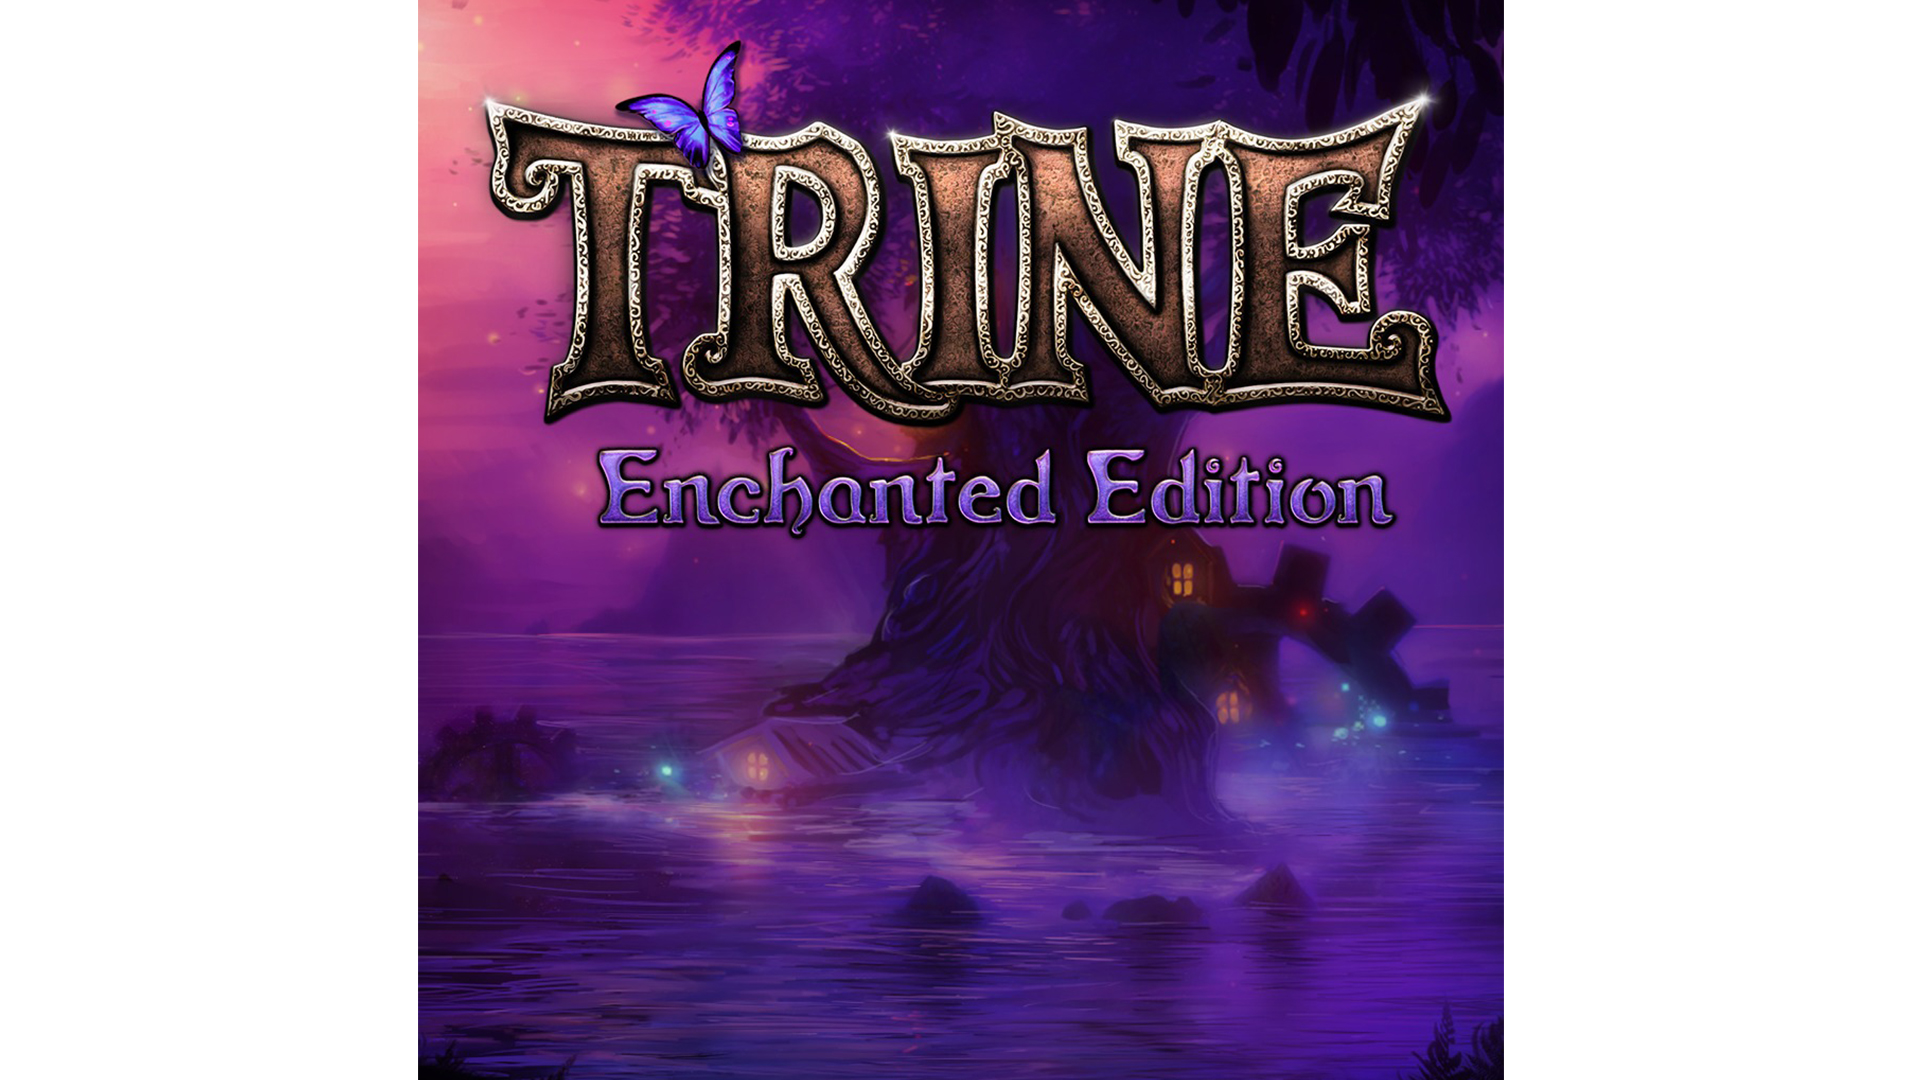 Trine enchanted edition